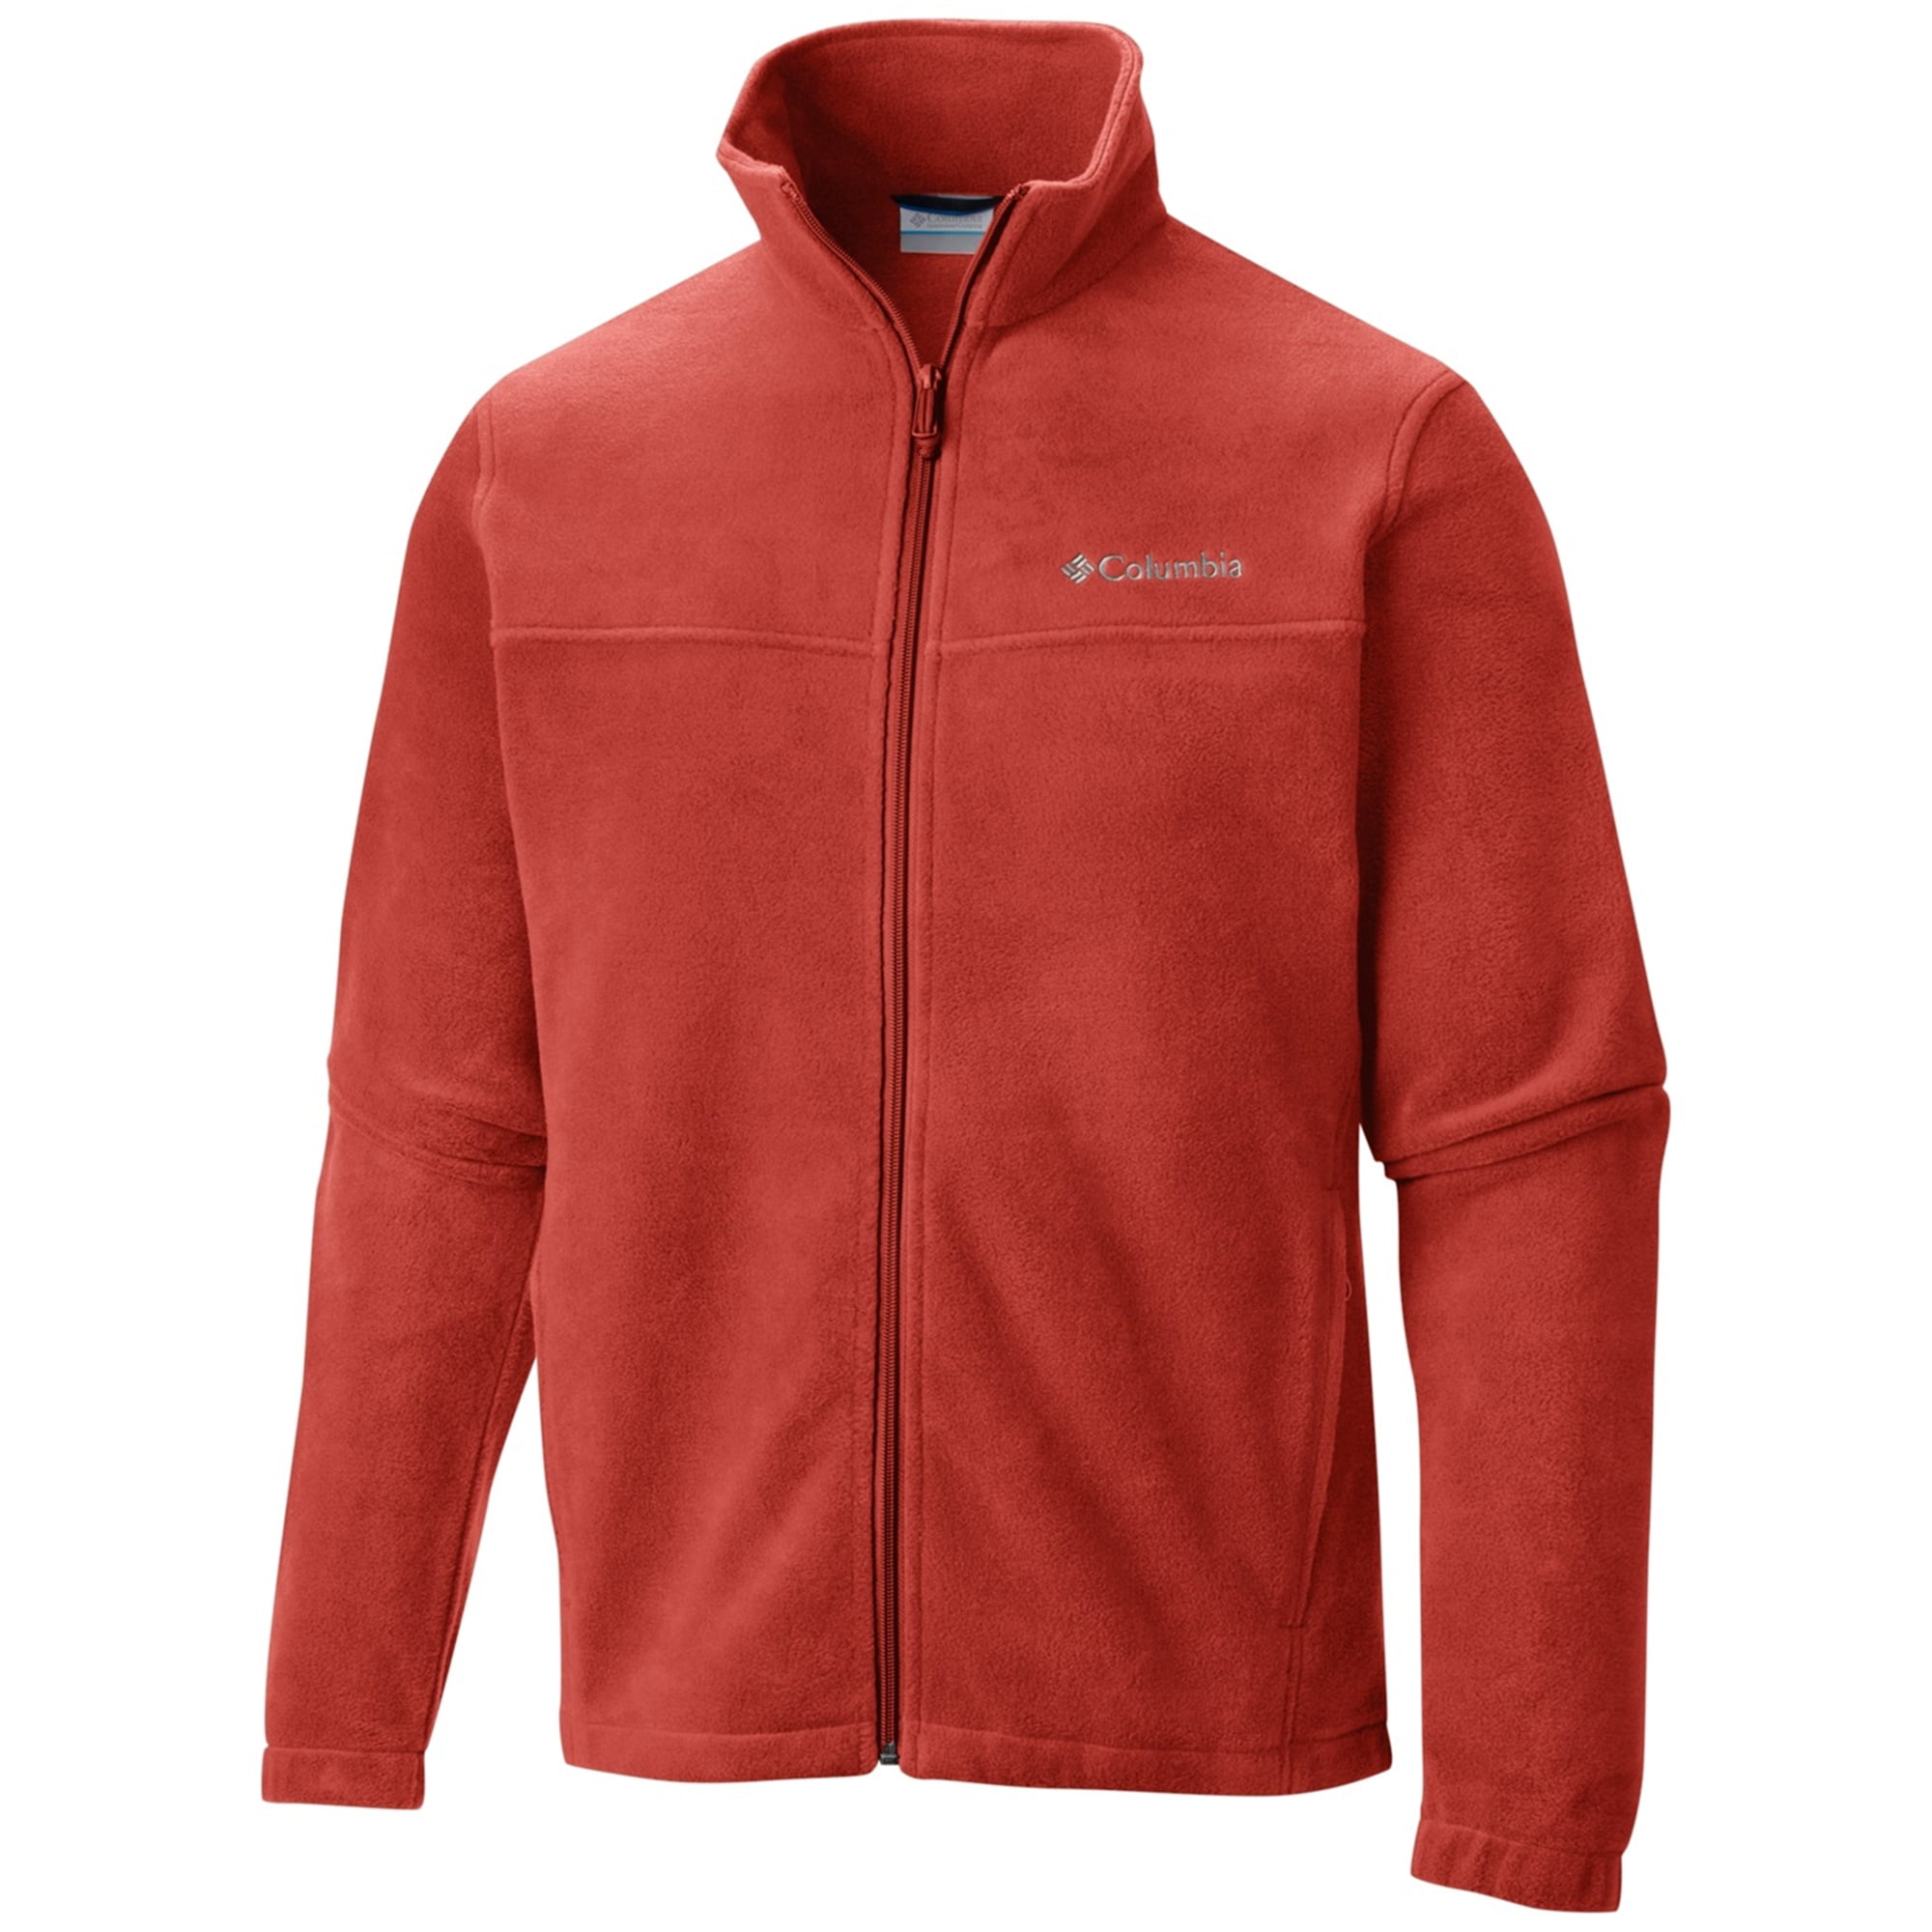 Columbia Mens Steens Mountain Fleece Jacket, Red, Large - Walmart.com ...